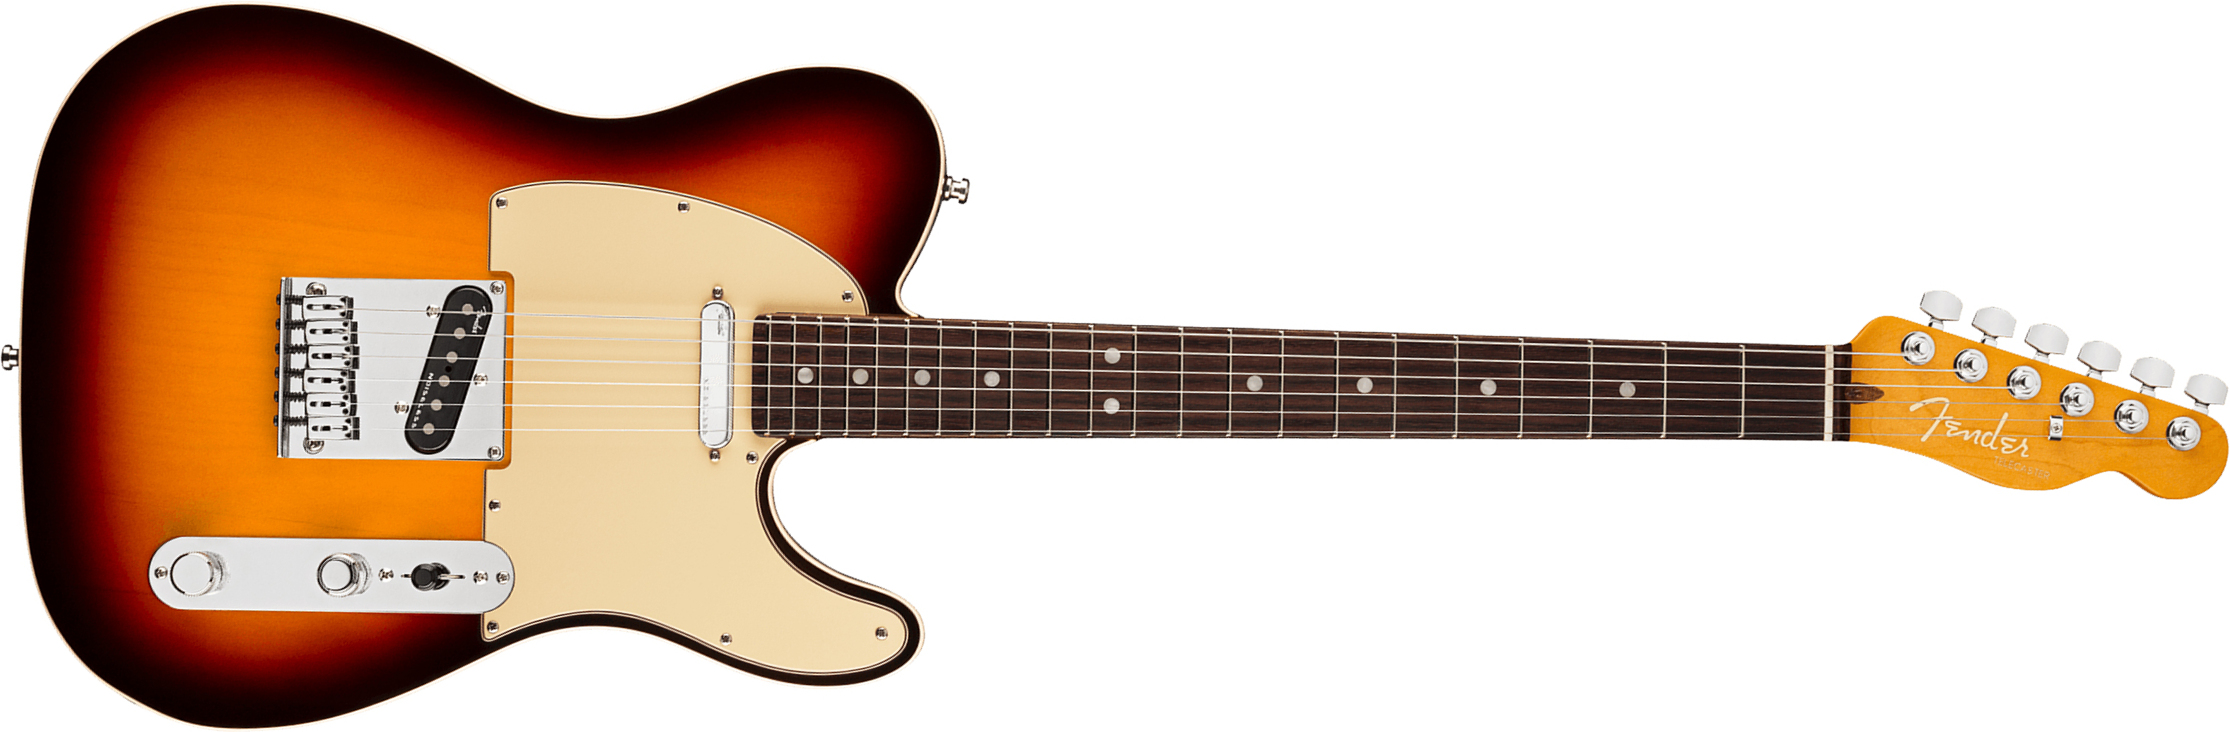 Fender Tele American Ultra 2019 Usa Rw - Ultraburst - Guitare Électrique Forme Tel - Main picture